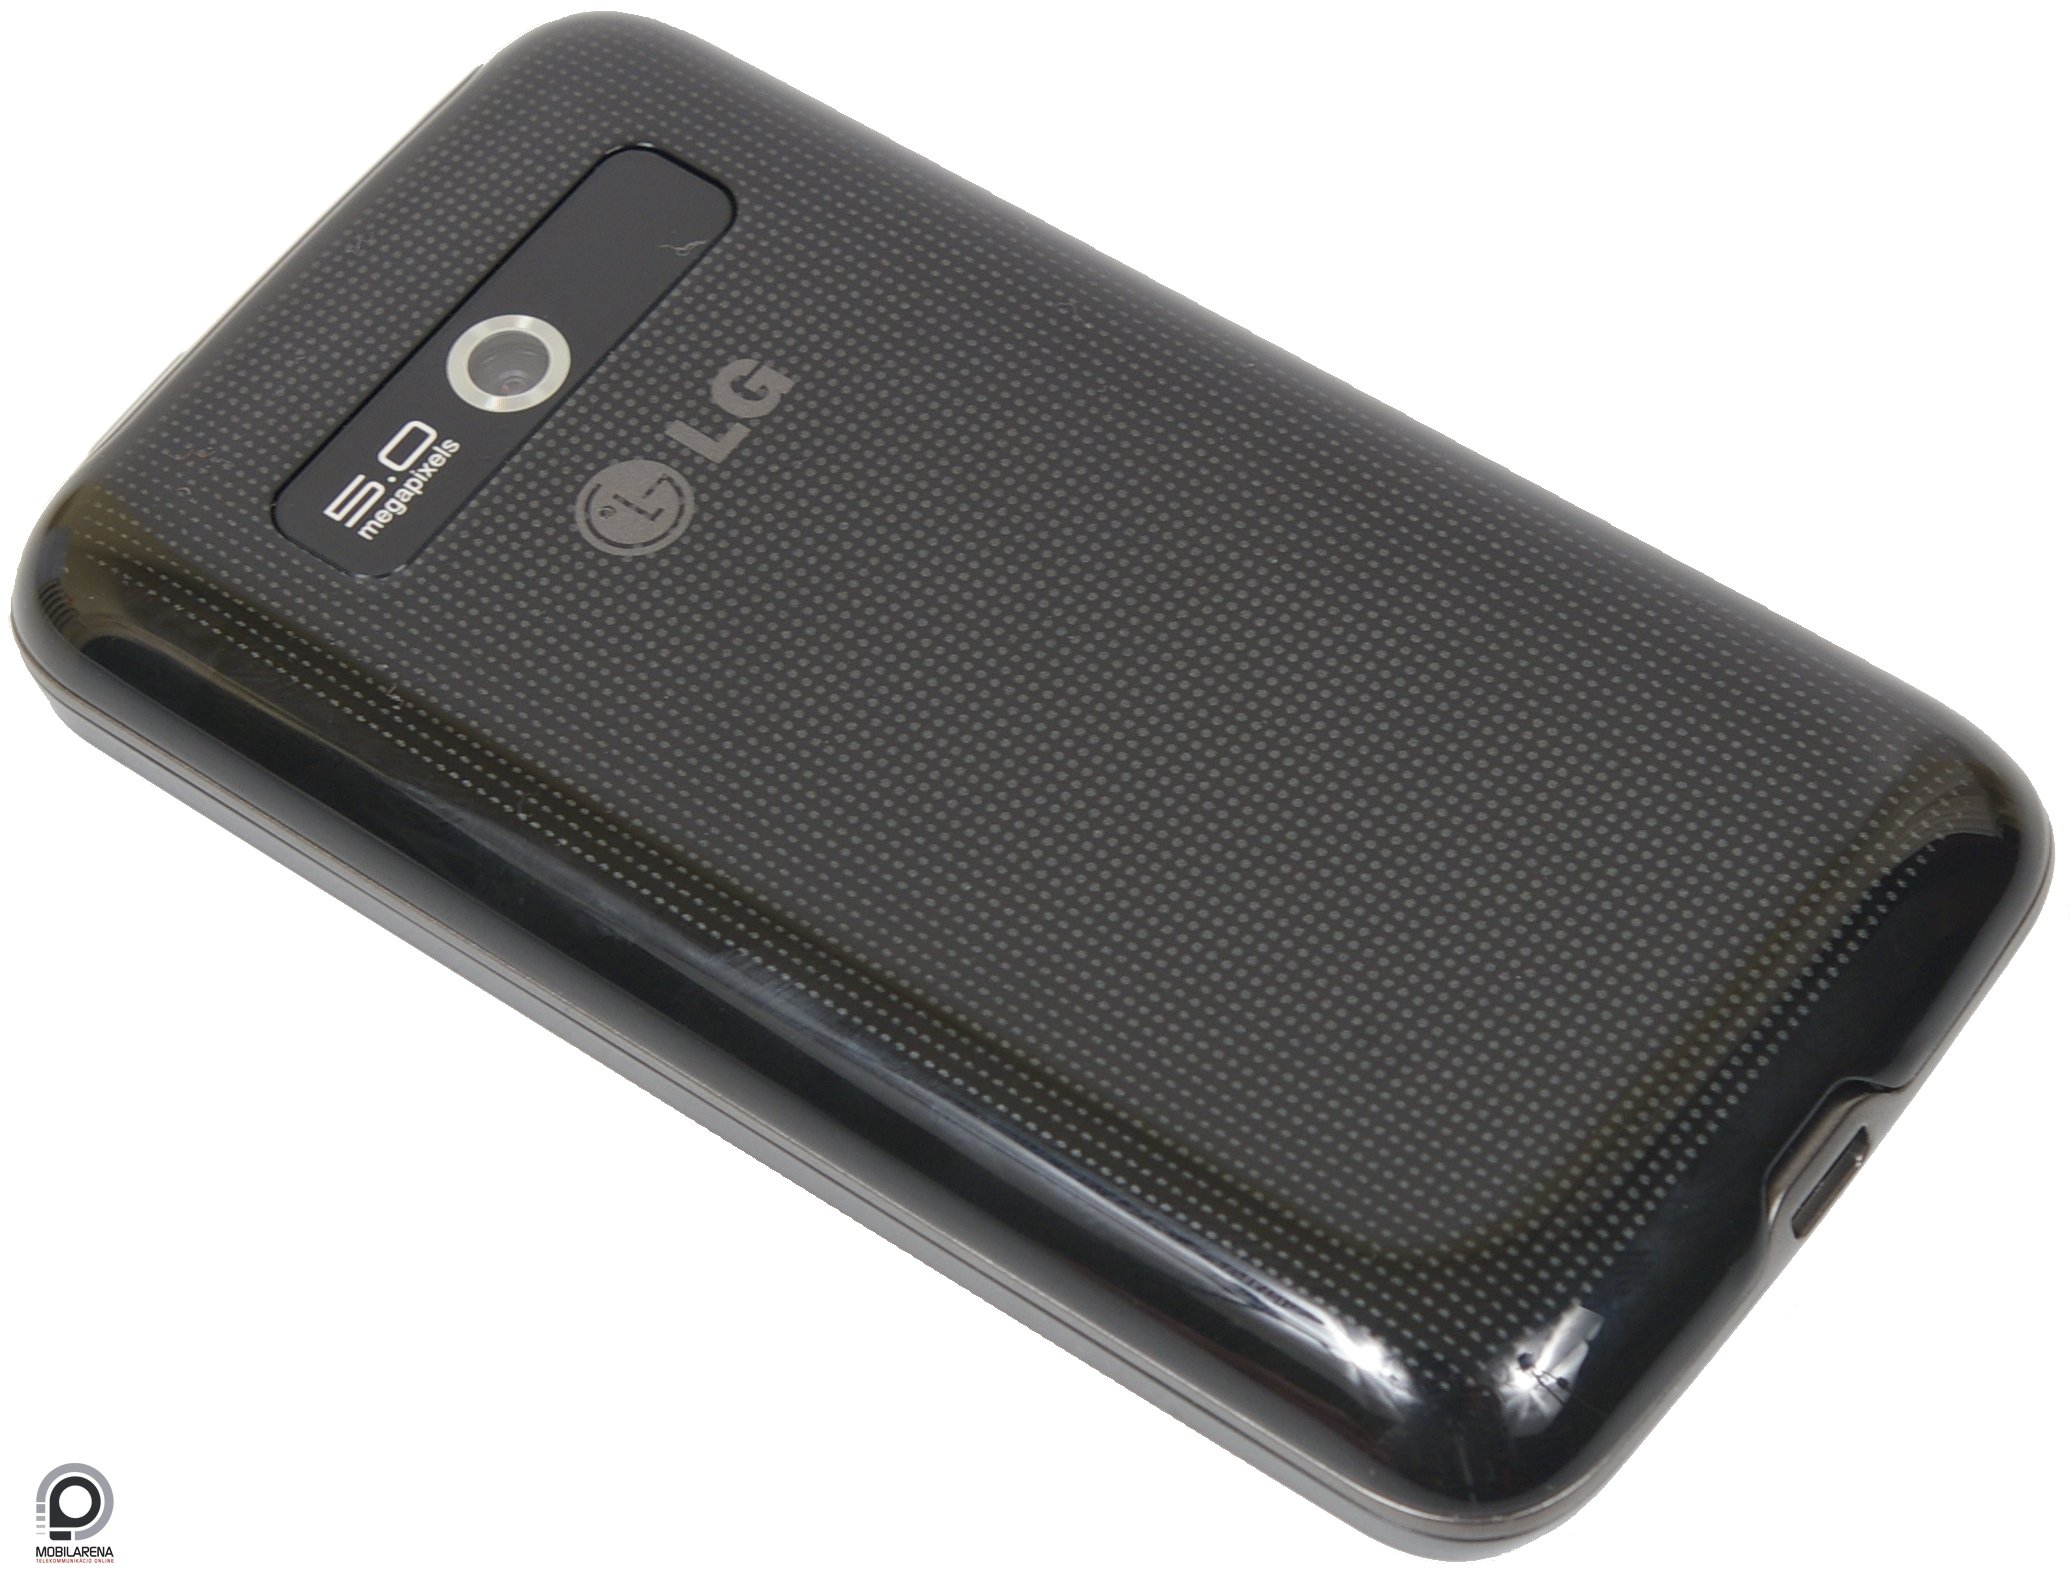 LG Optimus Hub E510 specs, review, release date - PhonesData